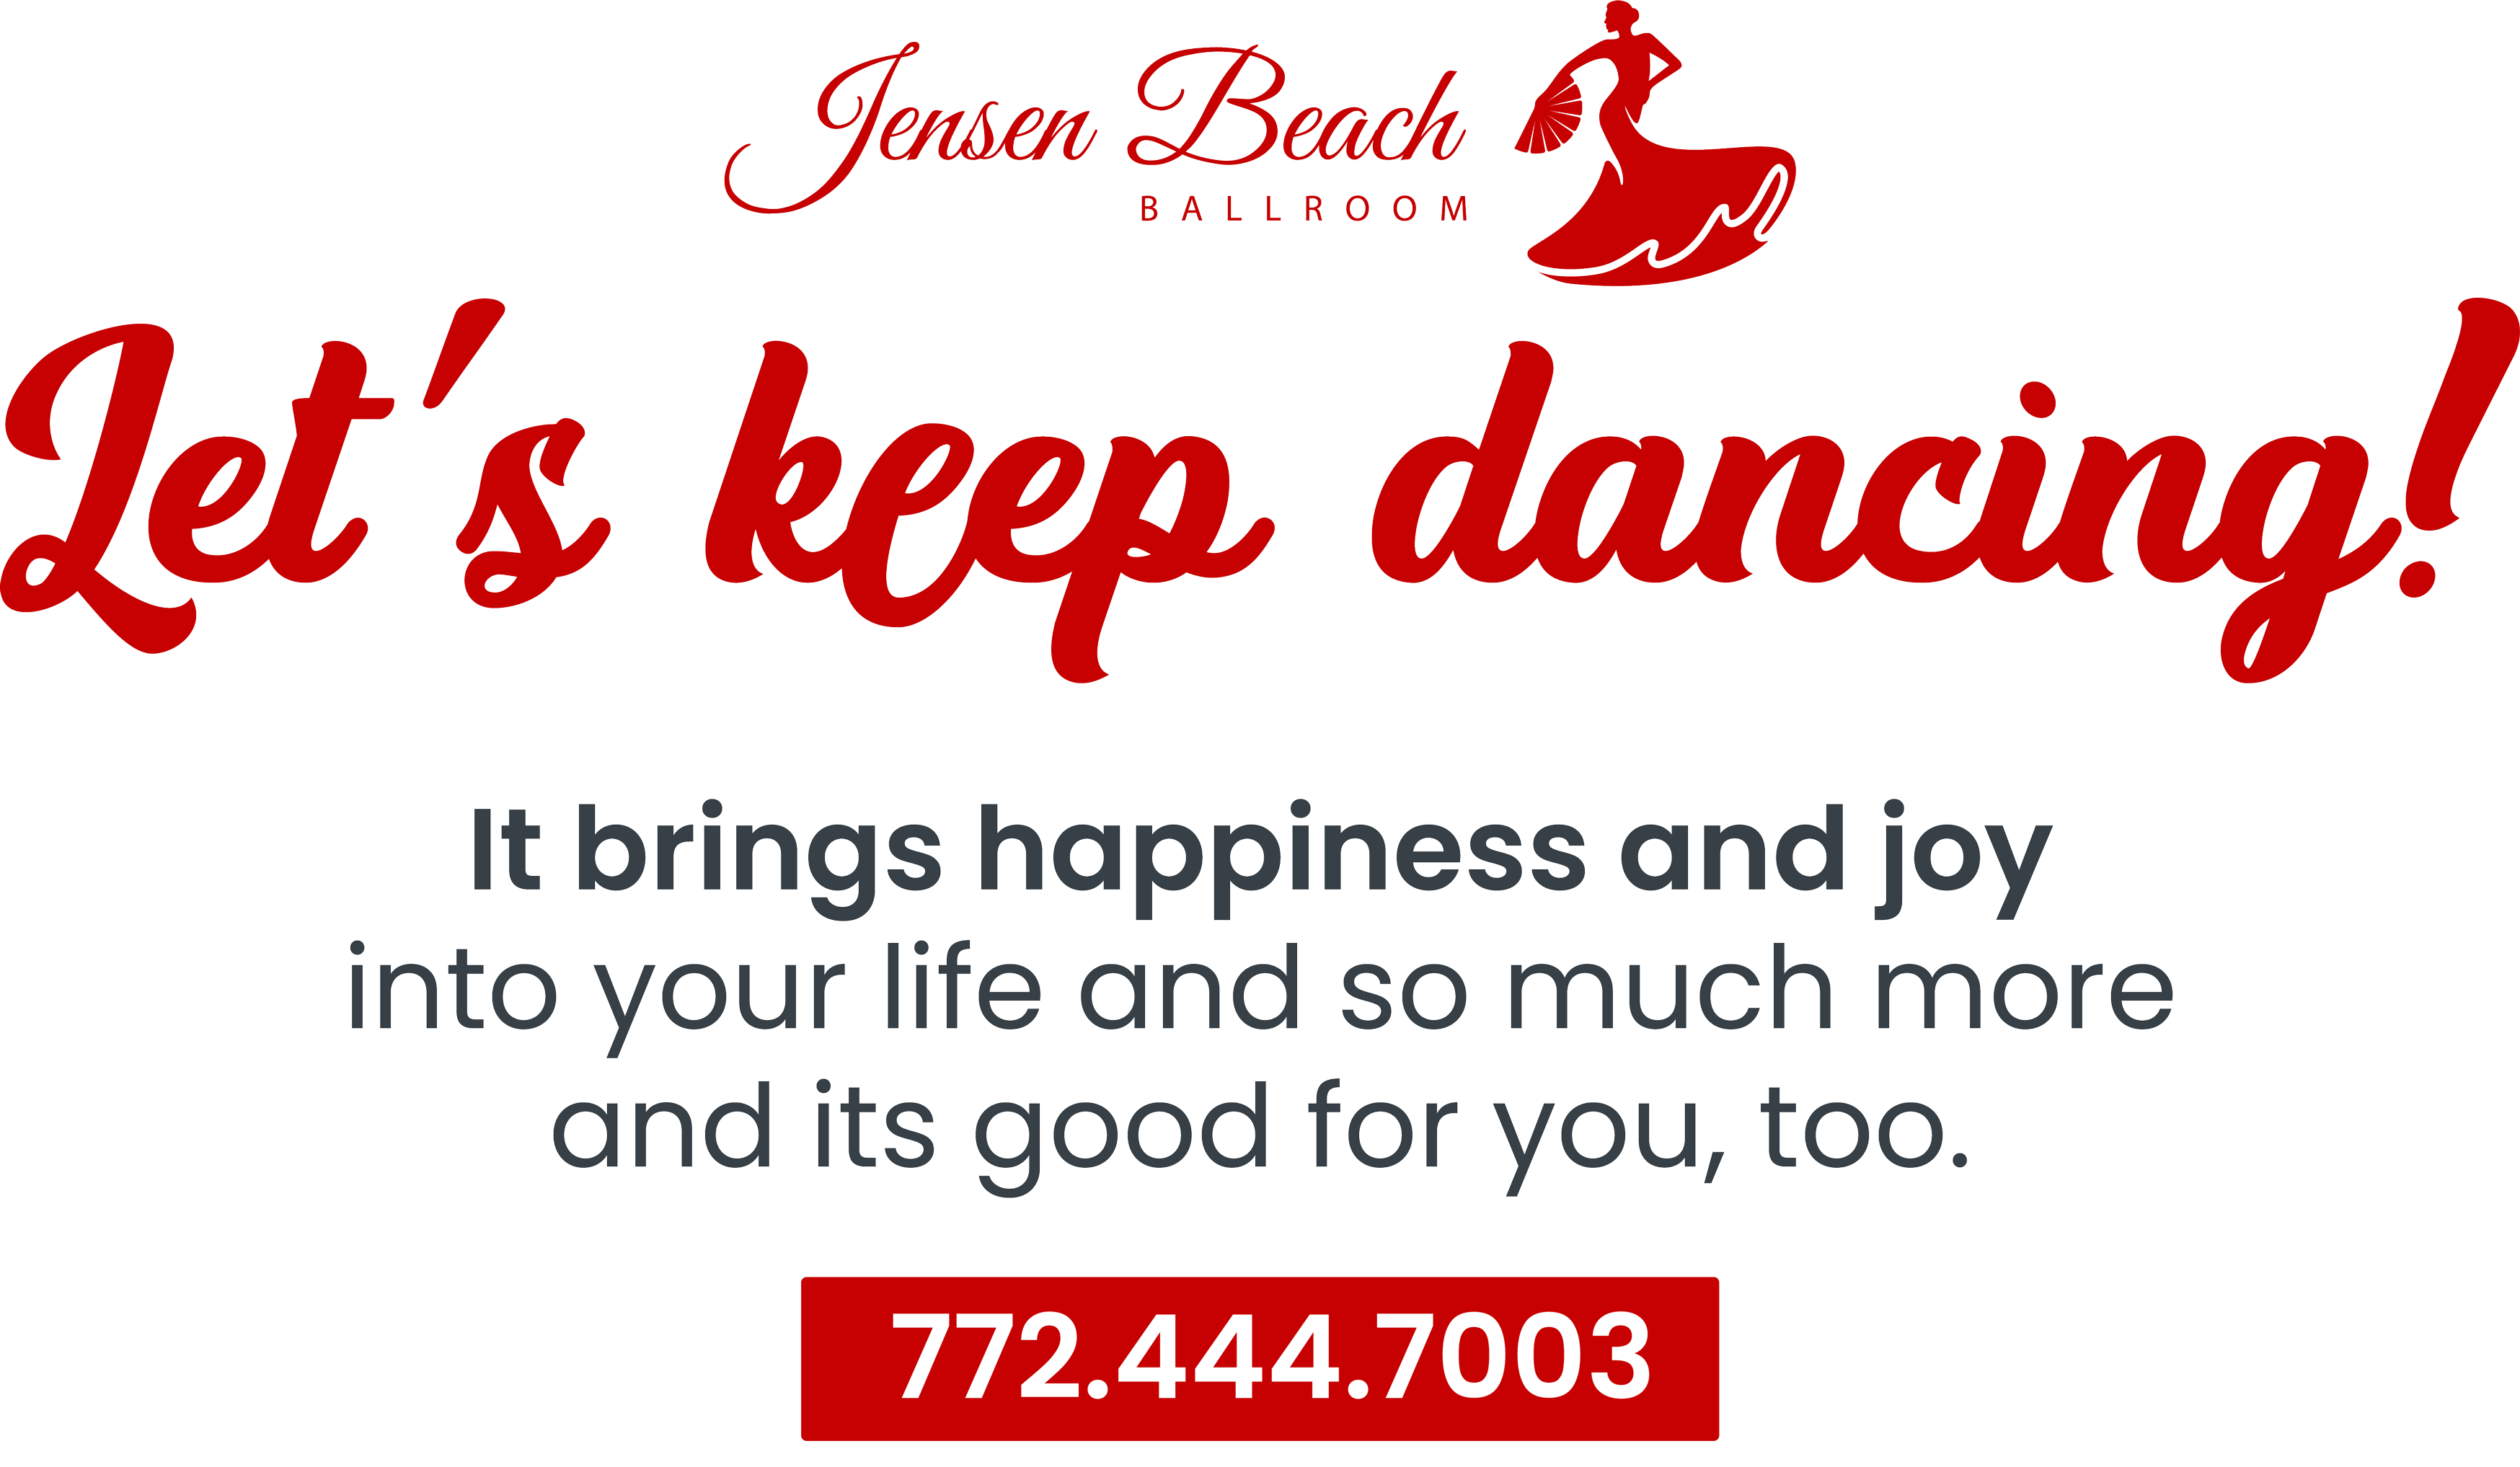 Jensen Beach Ballroom Studio Private & Group Lessons, Dance Parties